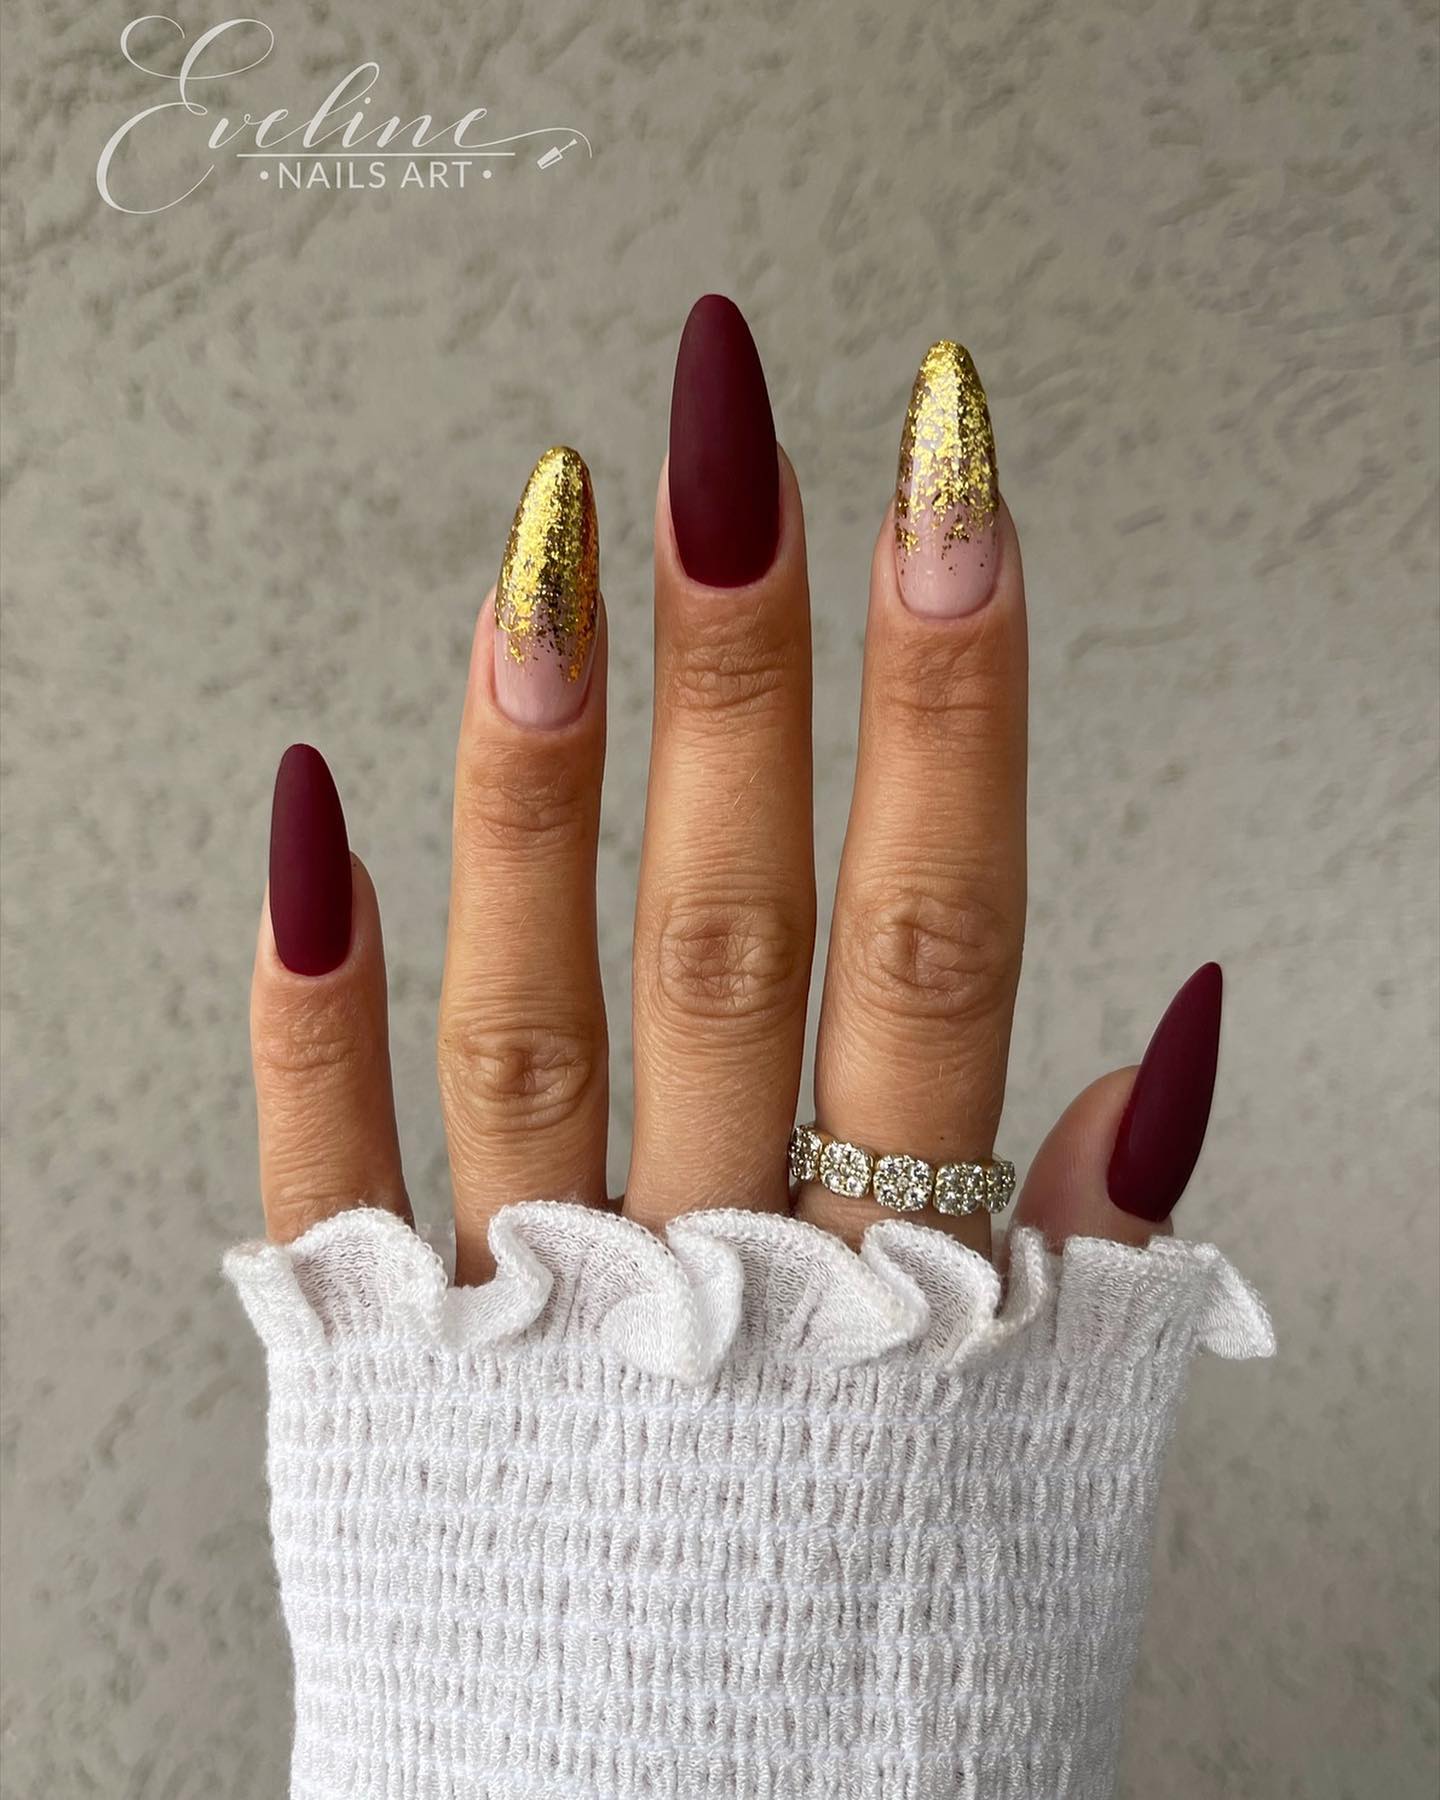 Lange donkerrode nagels met gouden glitter